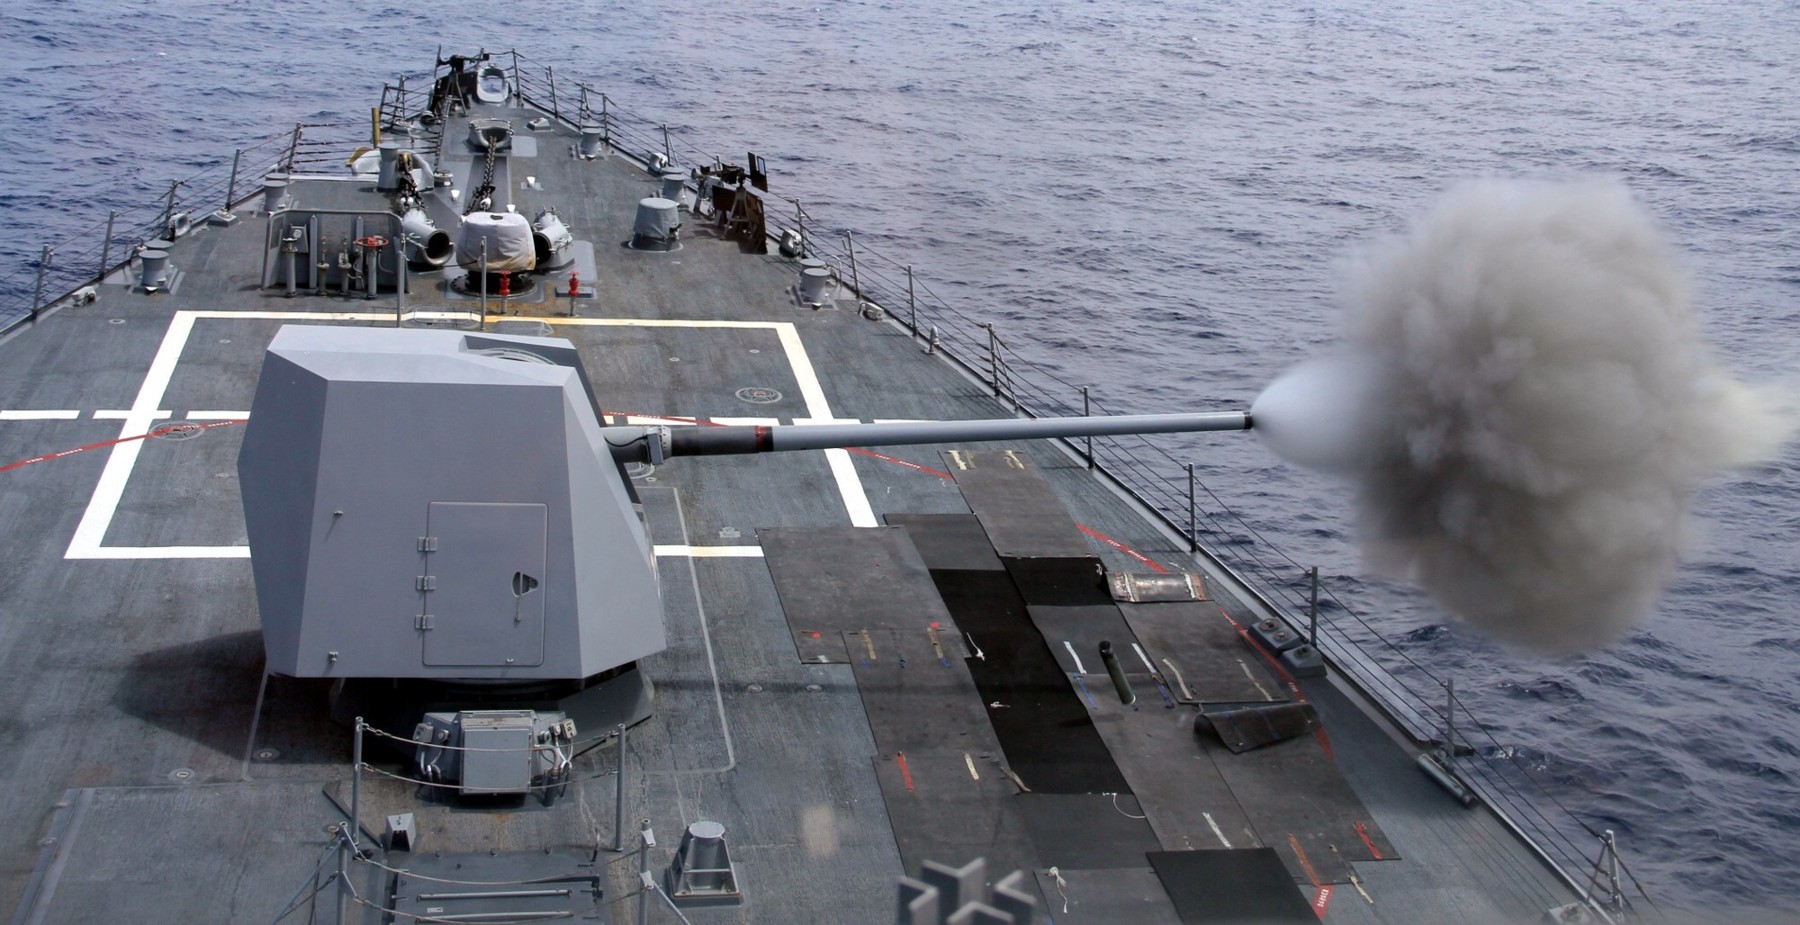 ddg-102 uss sampson arleigh burke class guided missile destroyer aegis us navy gun fire exercise 53